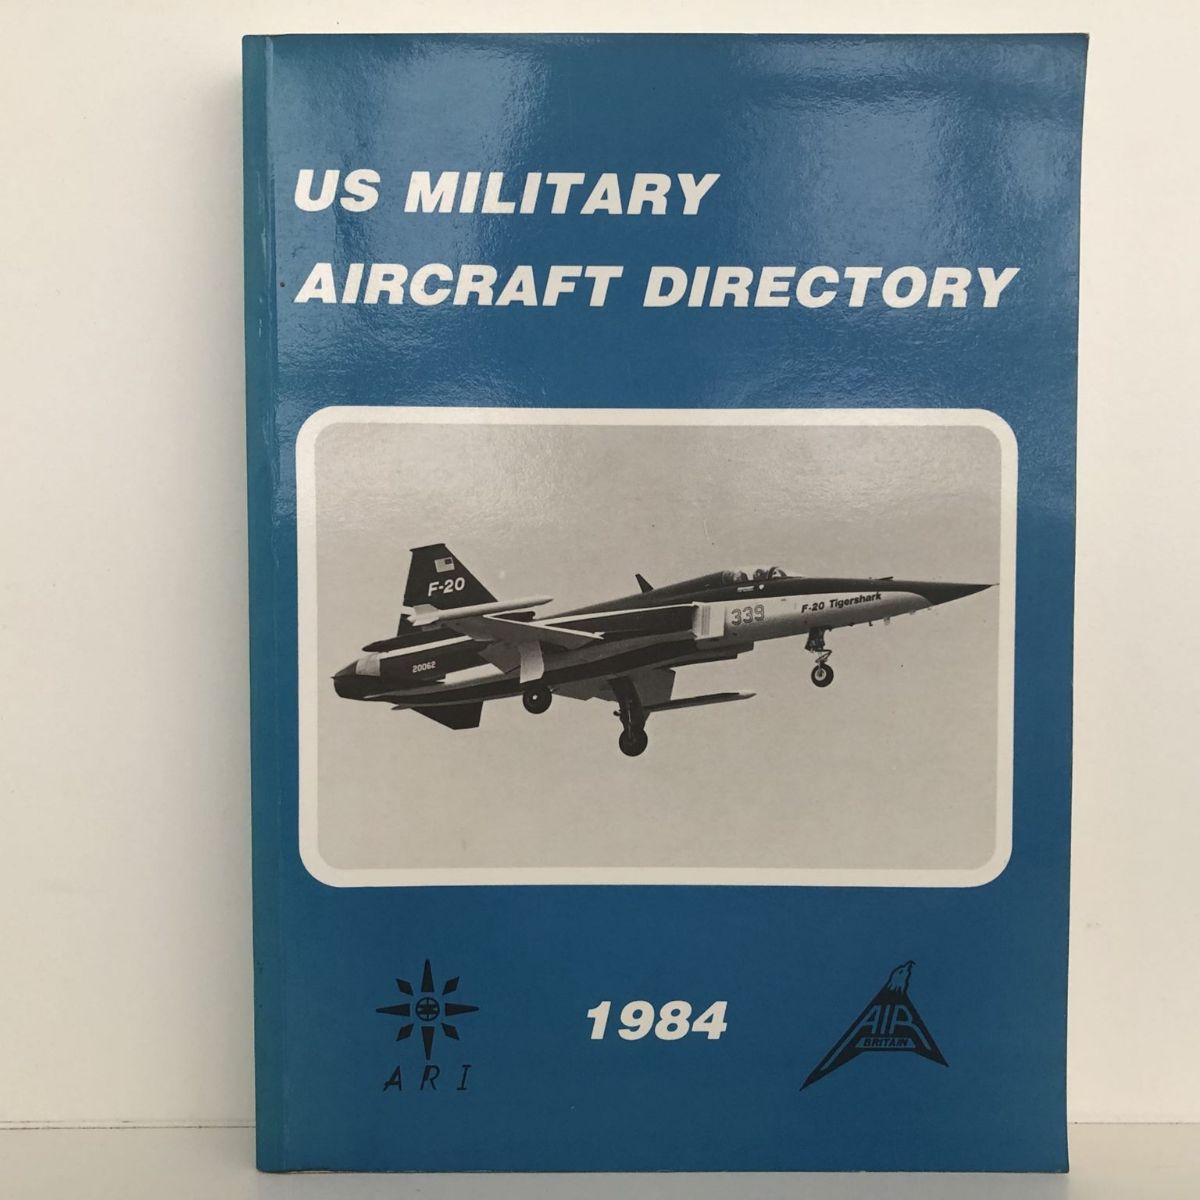 US MILITARY AIRCRAFT DIRECTORY 1984